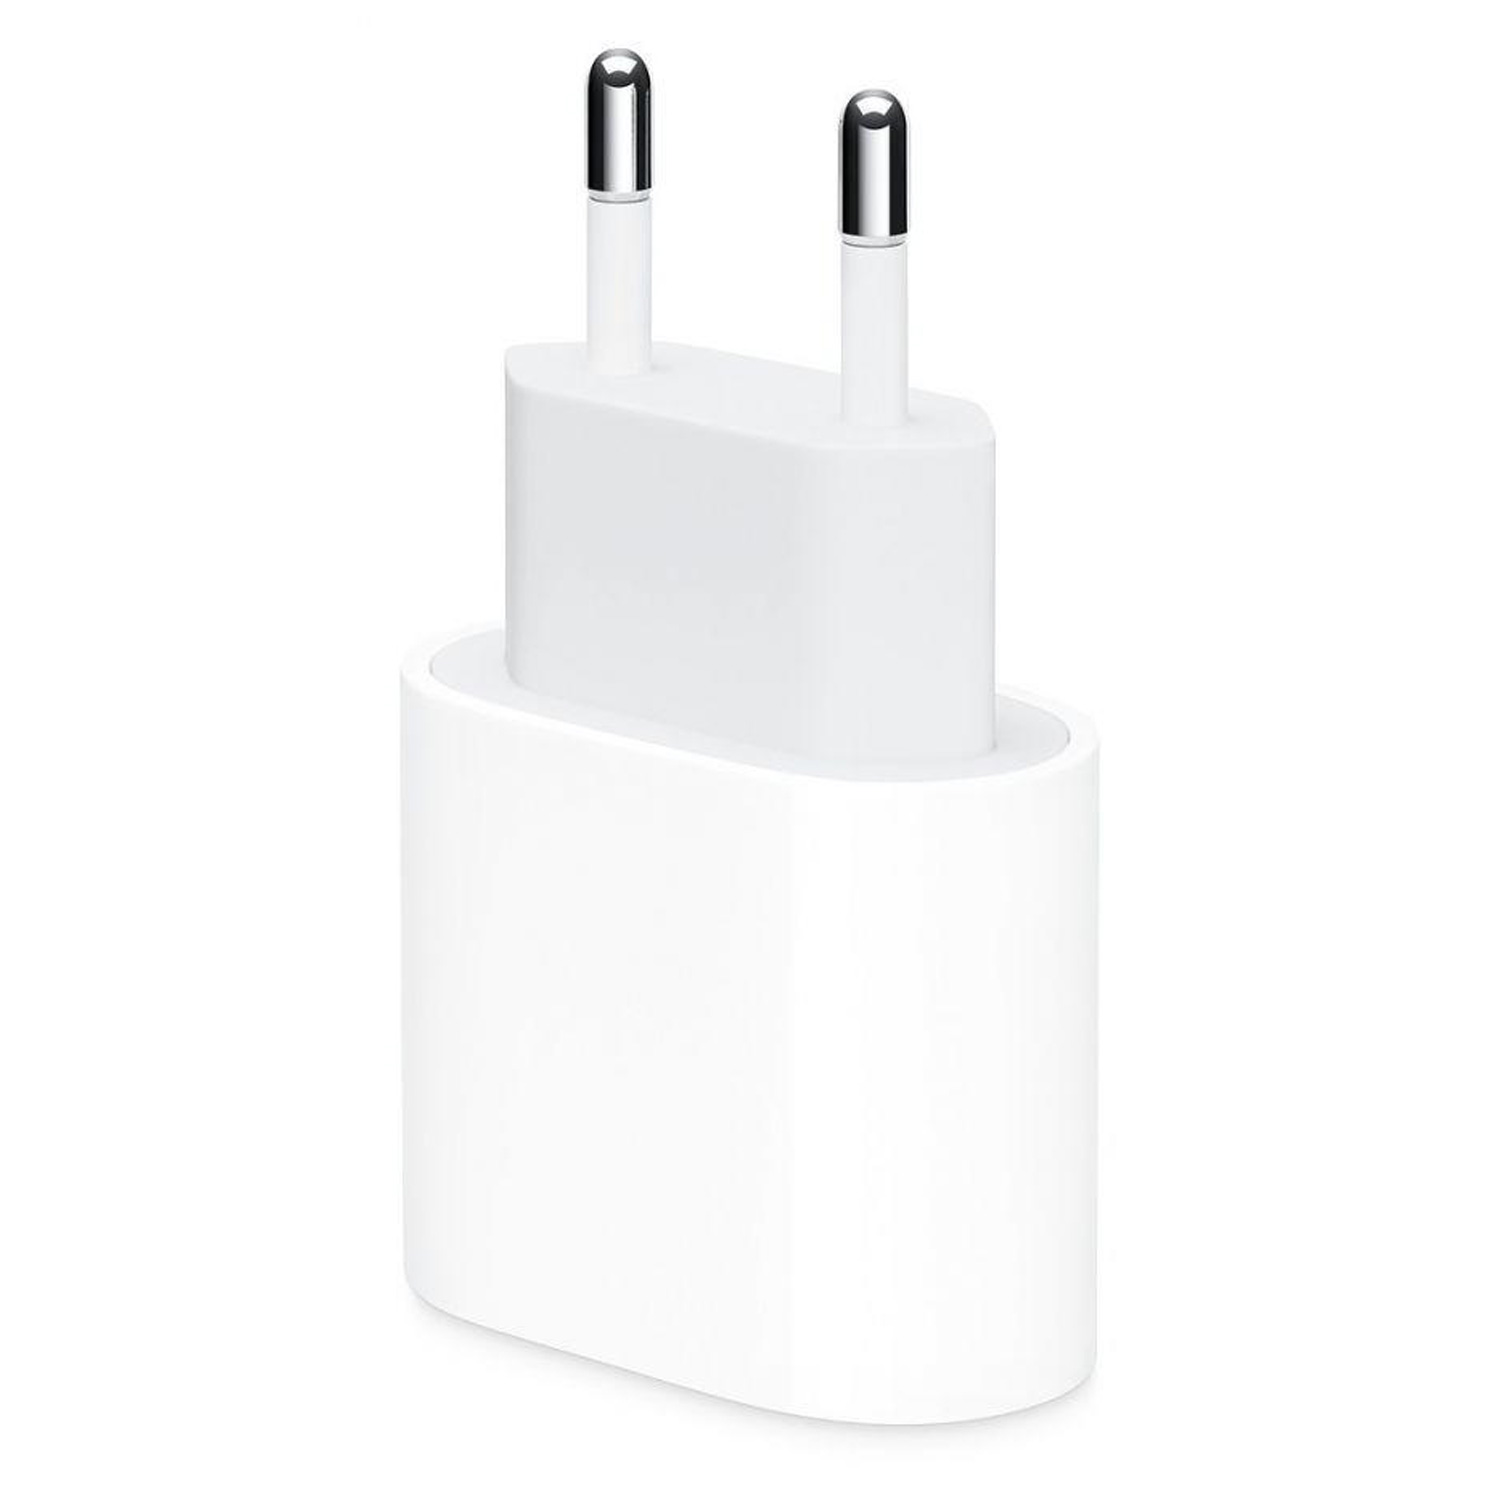 Carregador Apple USB-C + Cabo USB-C para Lightning iPhone 12 /13 / 14 MU7V2ZM/A 20W - Branco